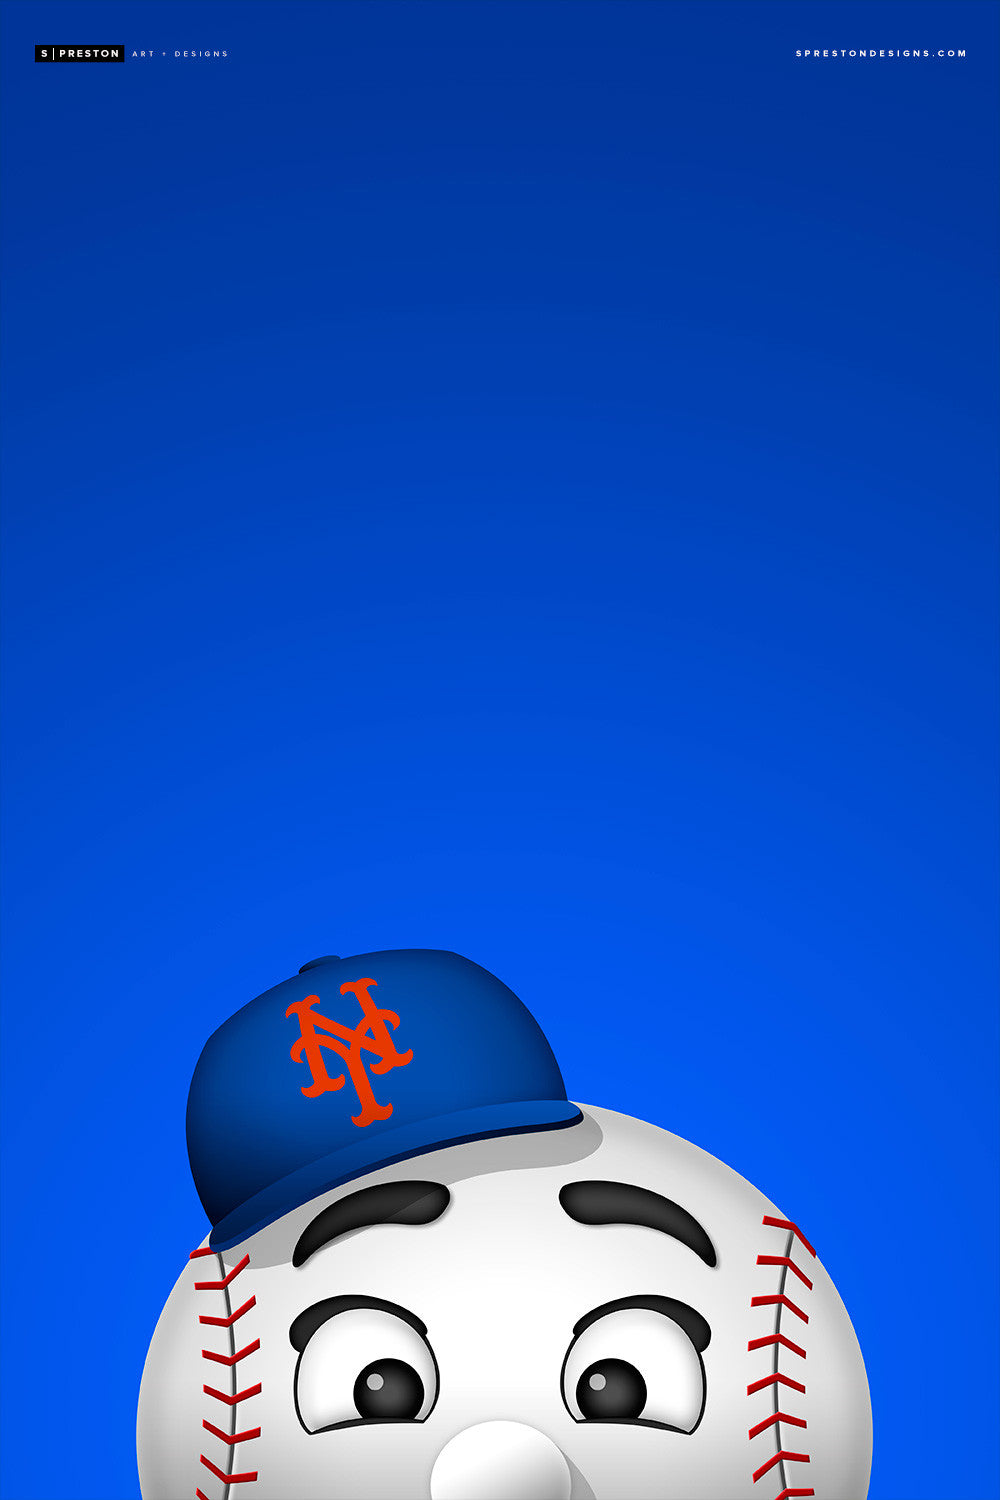 Minimalist Mr. Met Canvas Canvas - New York Mets - S. Preston Art + Designs